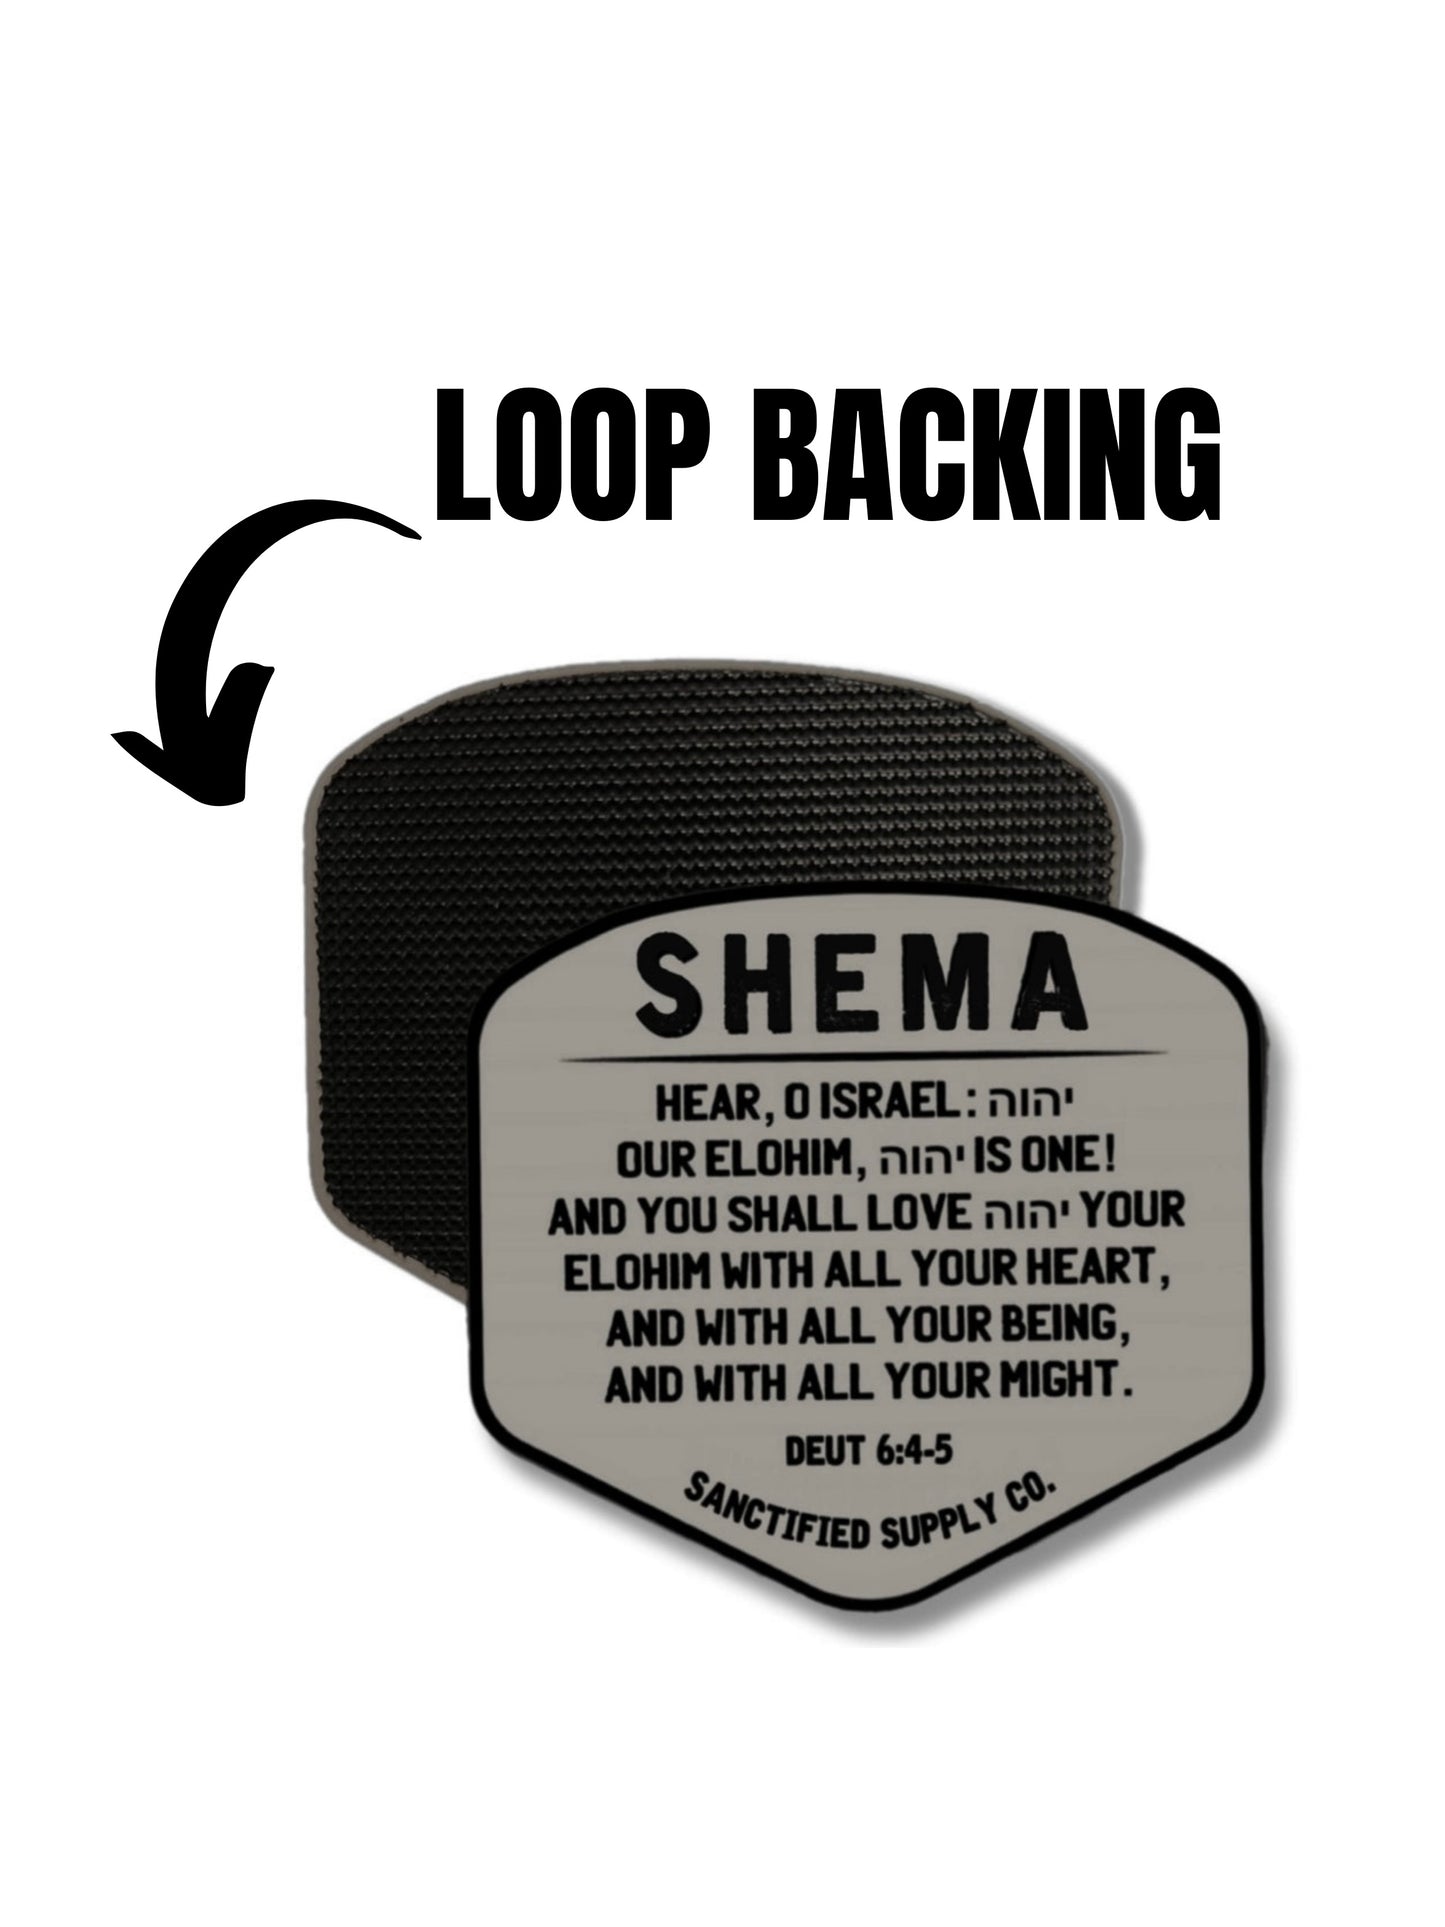 Shema Velcro Patch